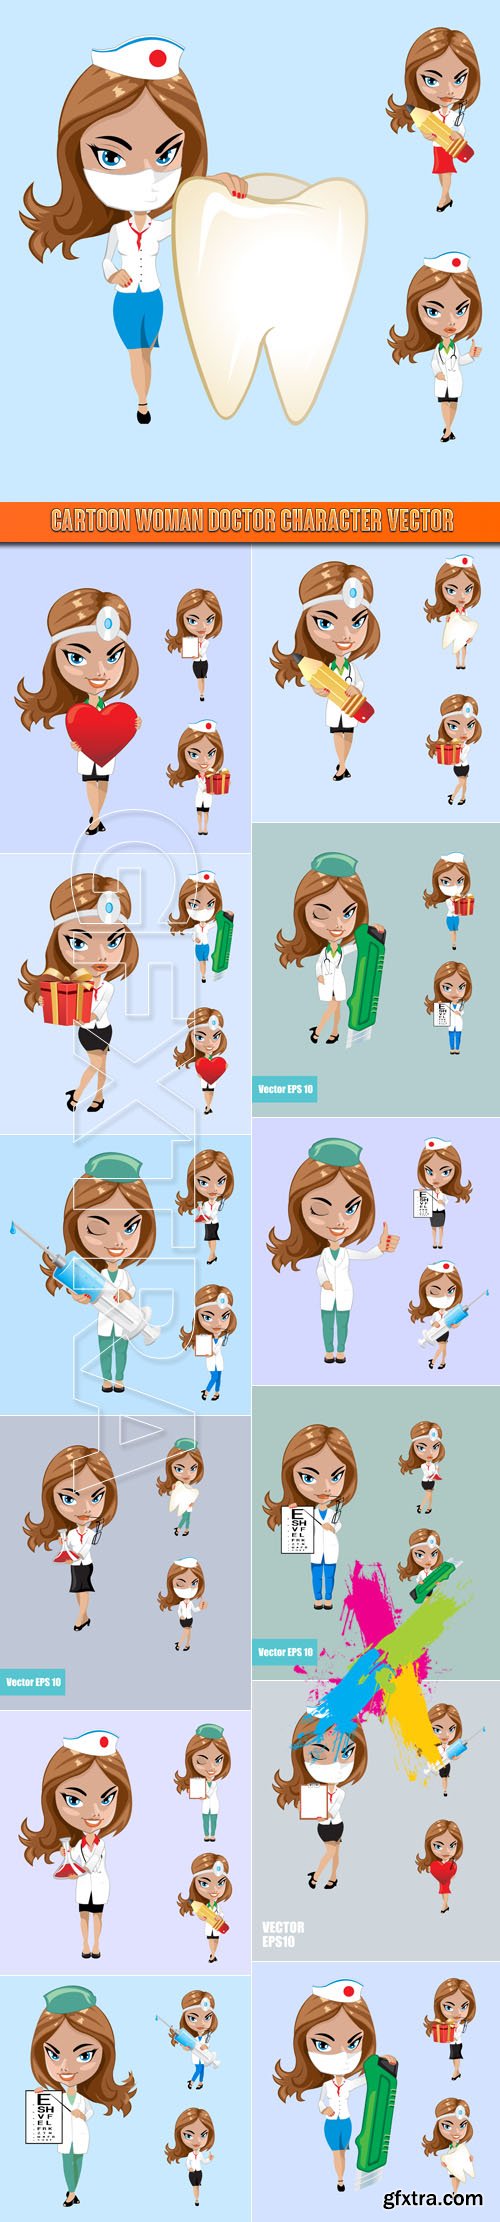 Cartoon woman doctor character vector